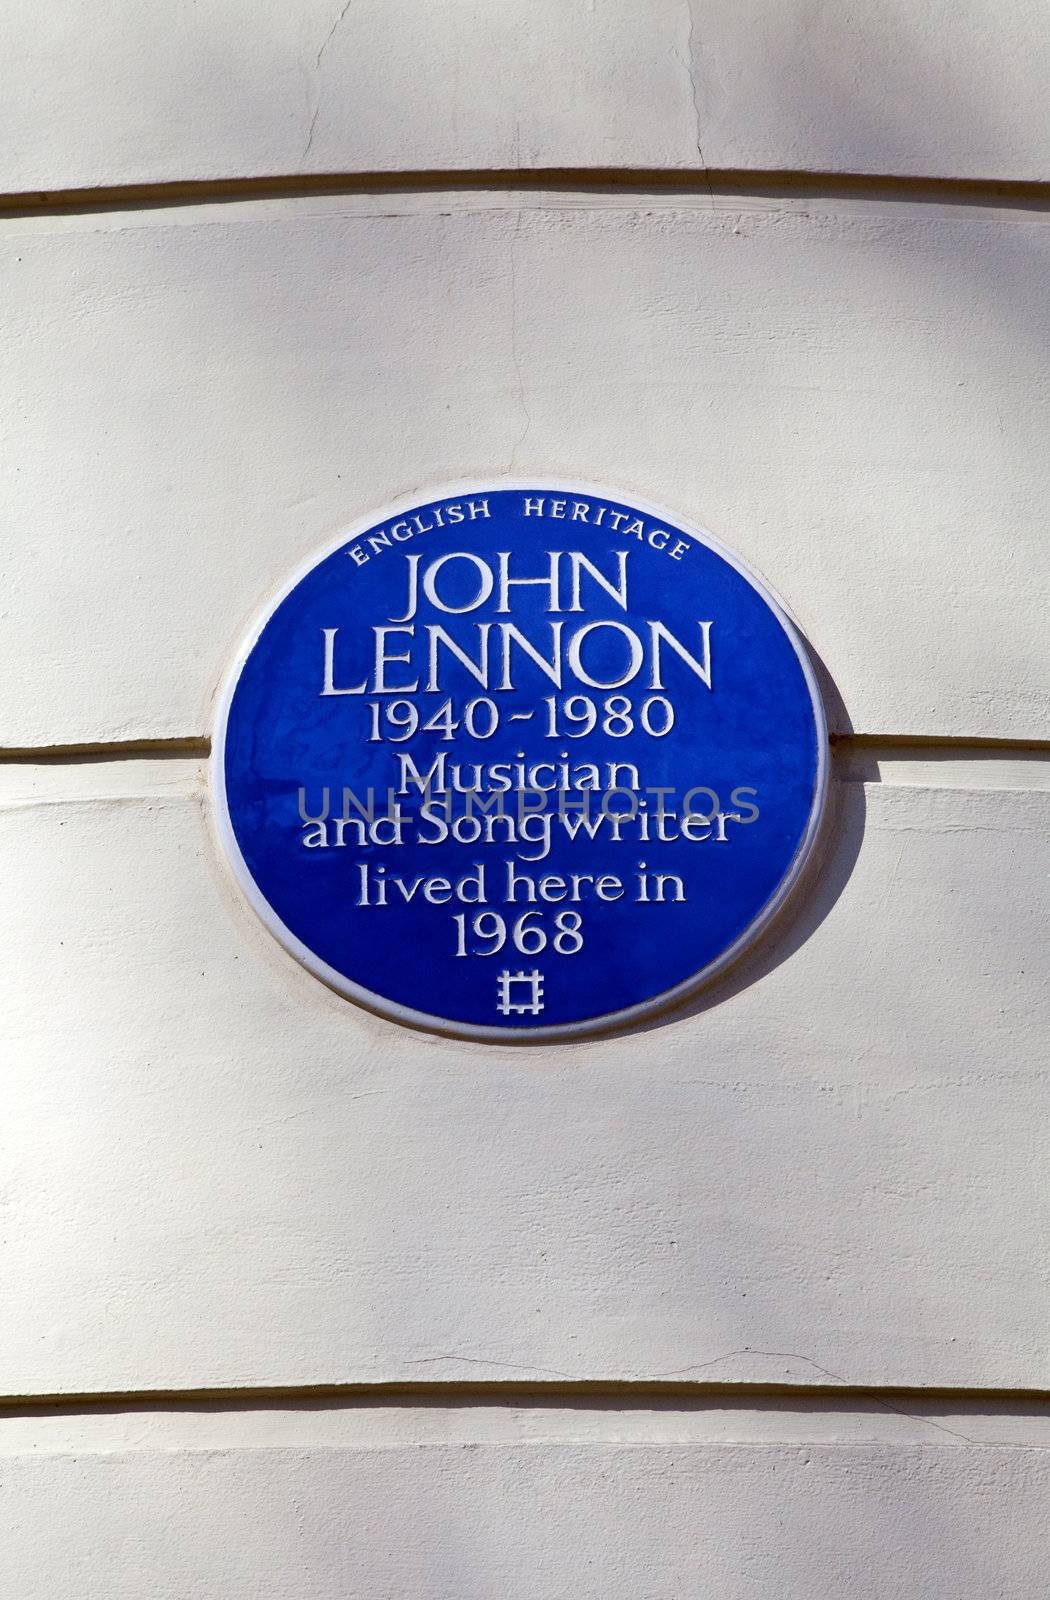 John Lennon blue plaque marking one of his former residences in London.